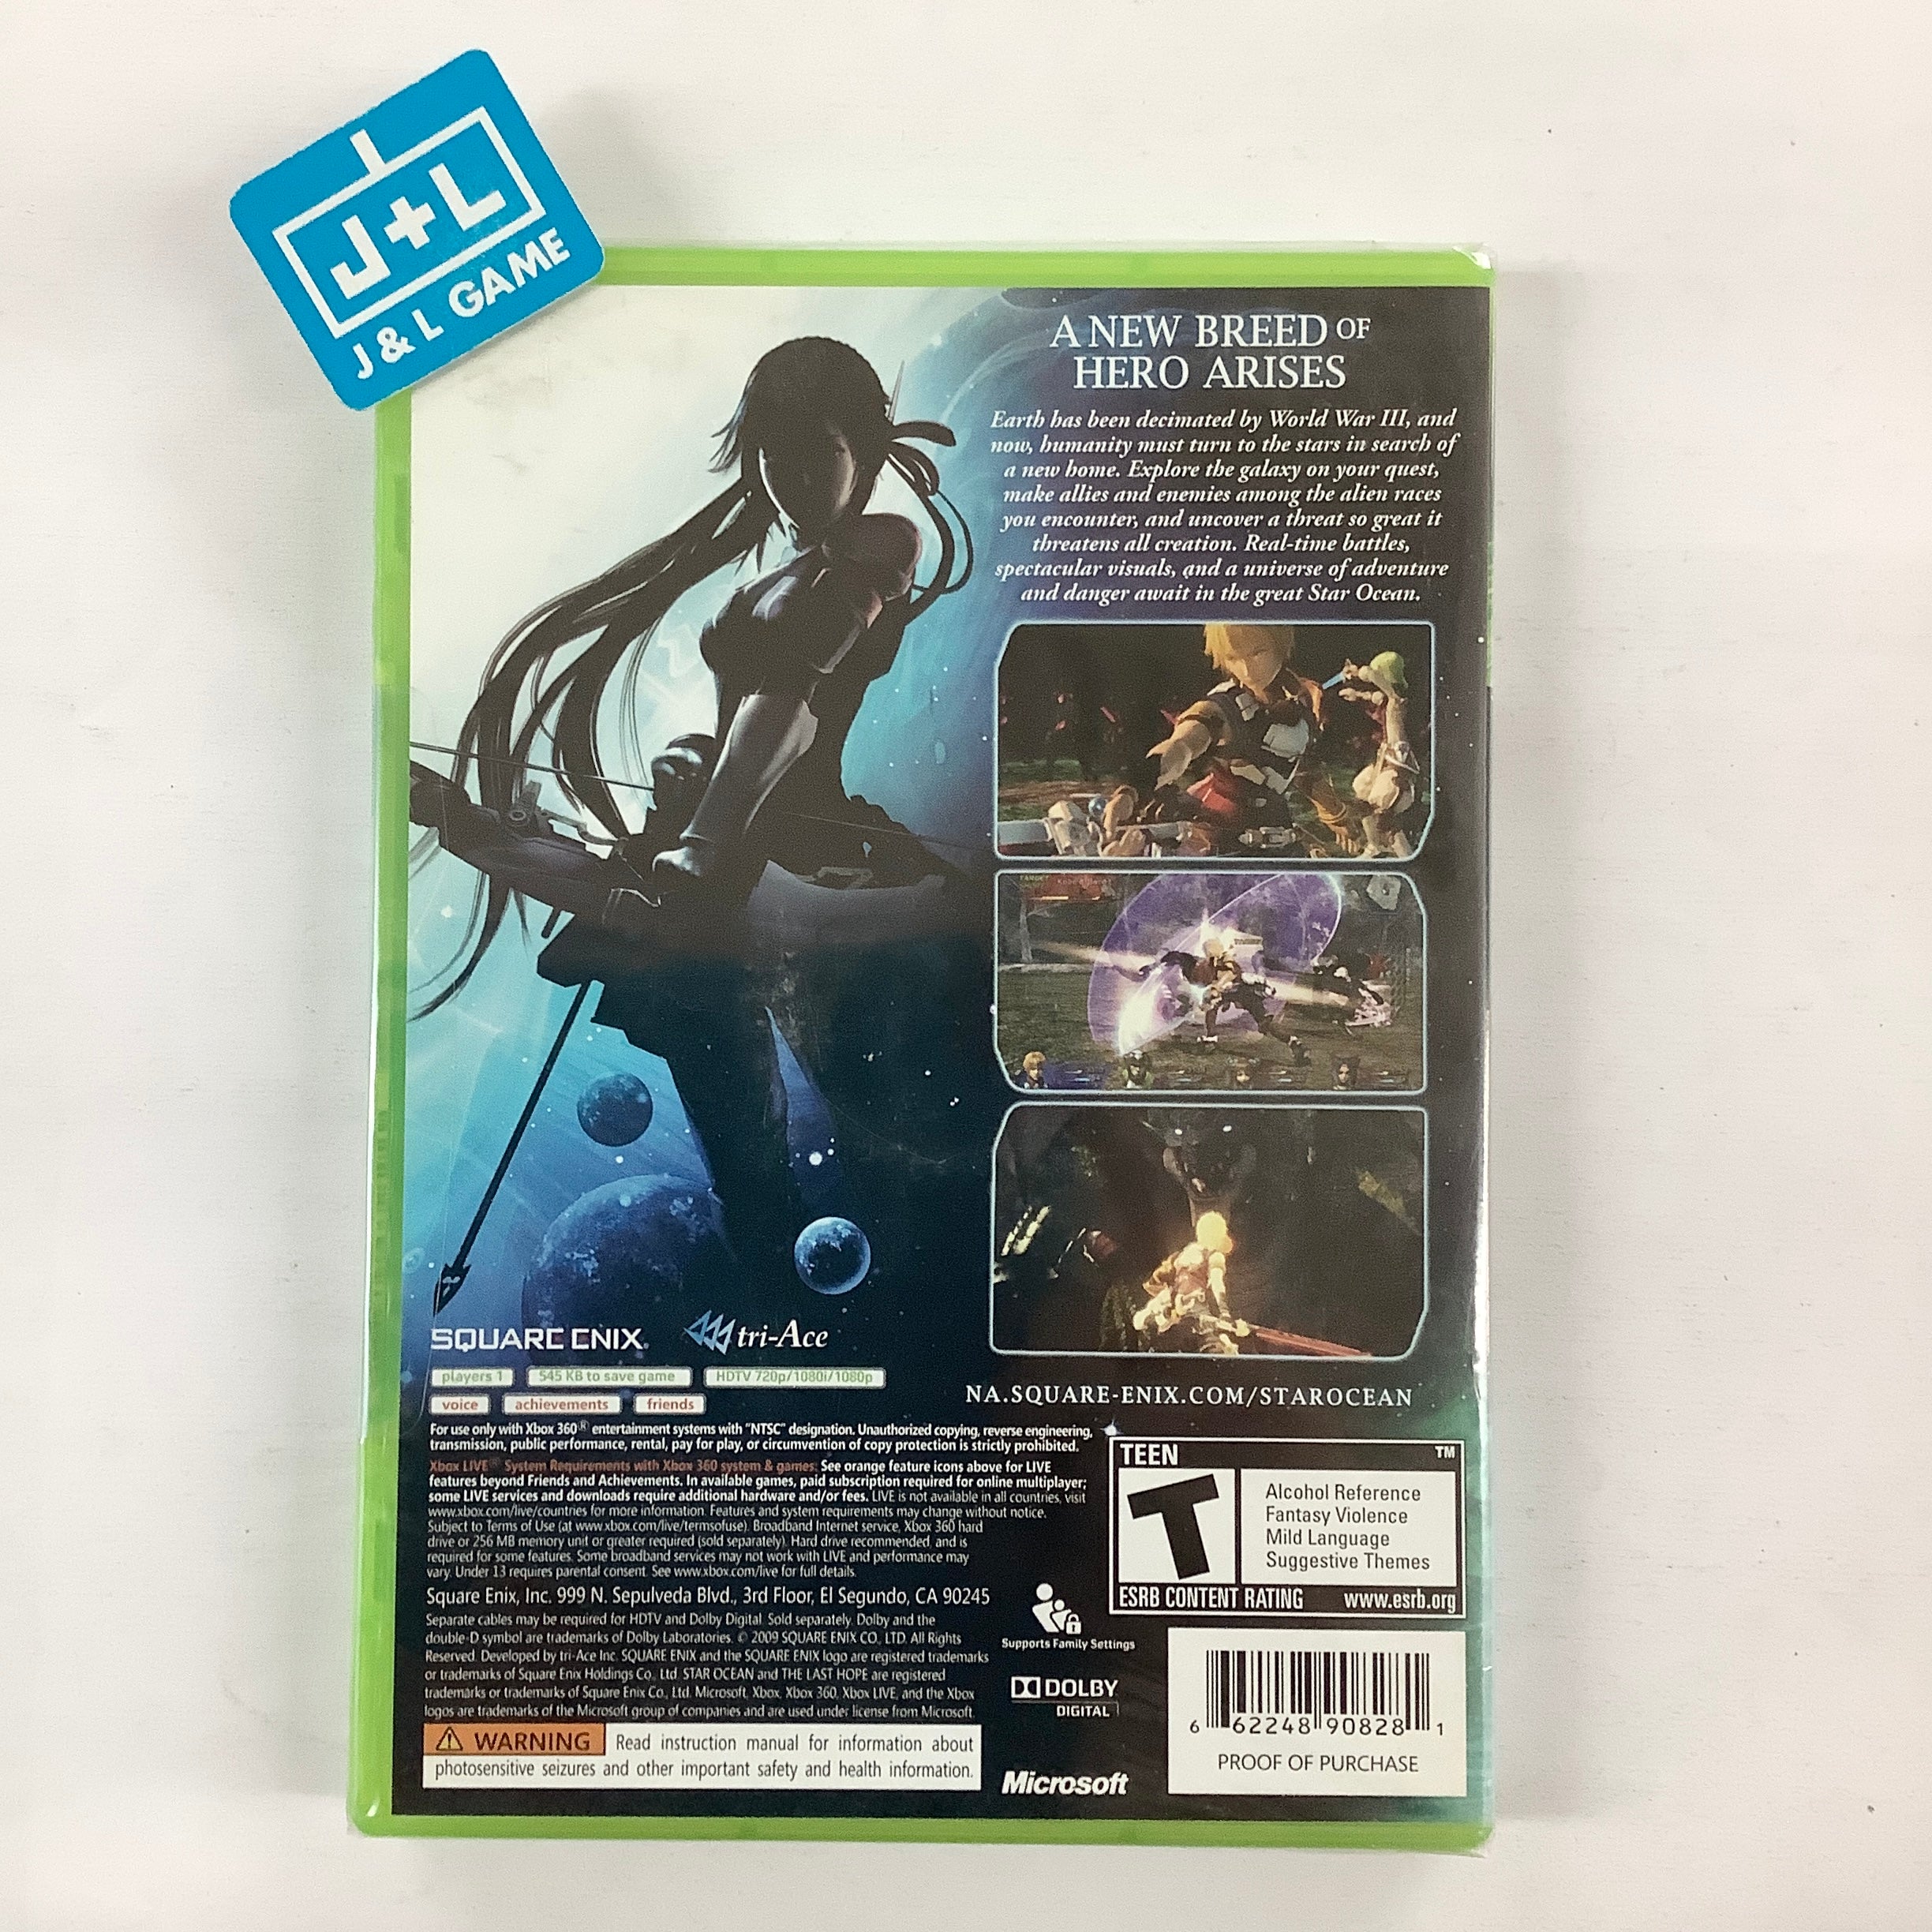 Star Ocean: The Last Hope - Xbox 360 Video Games Square Enix   